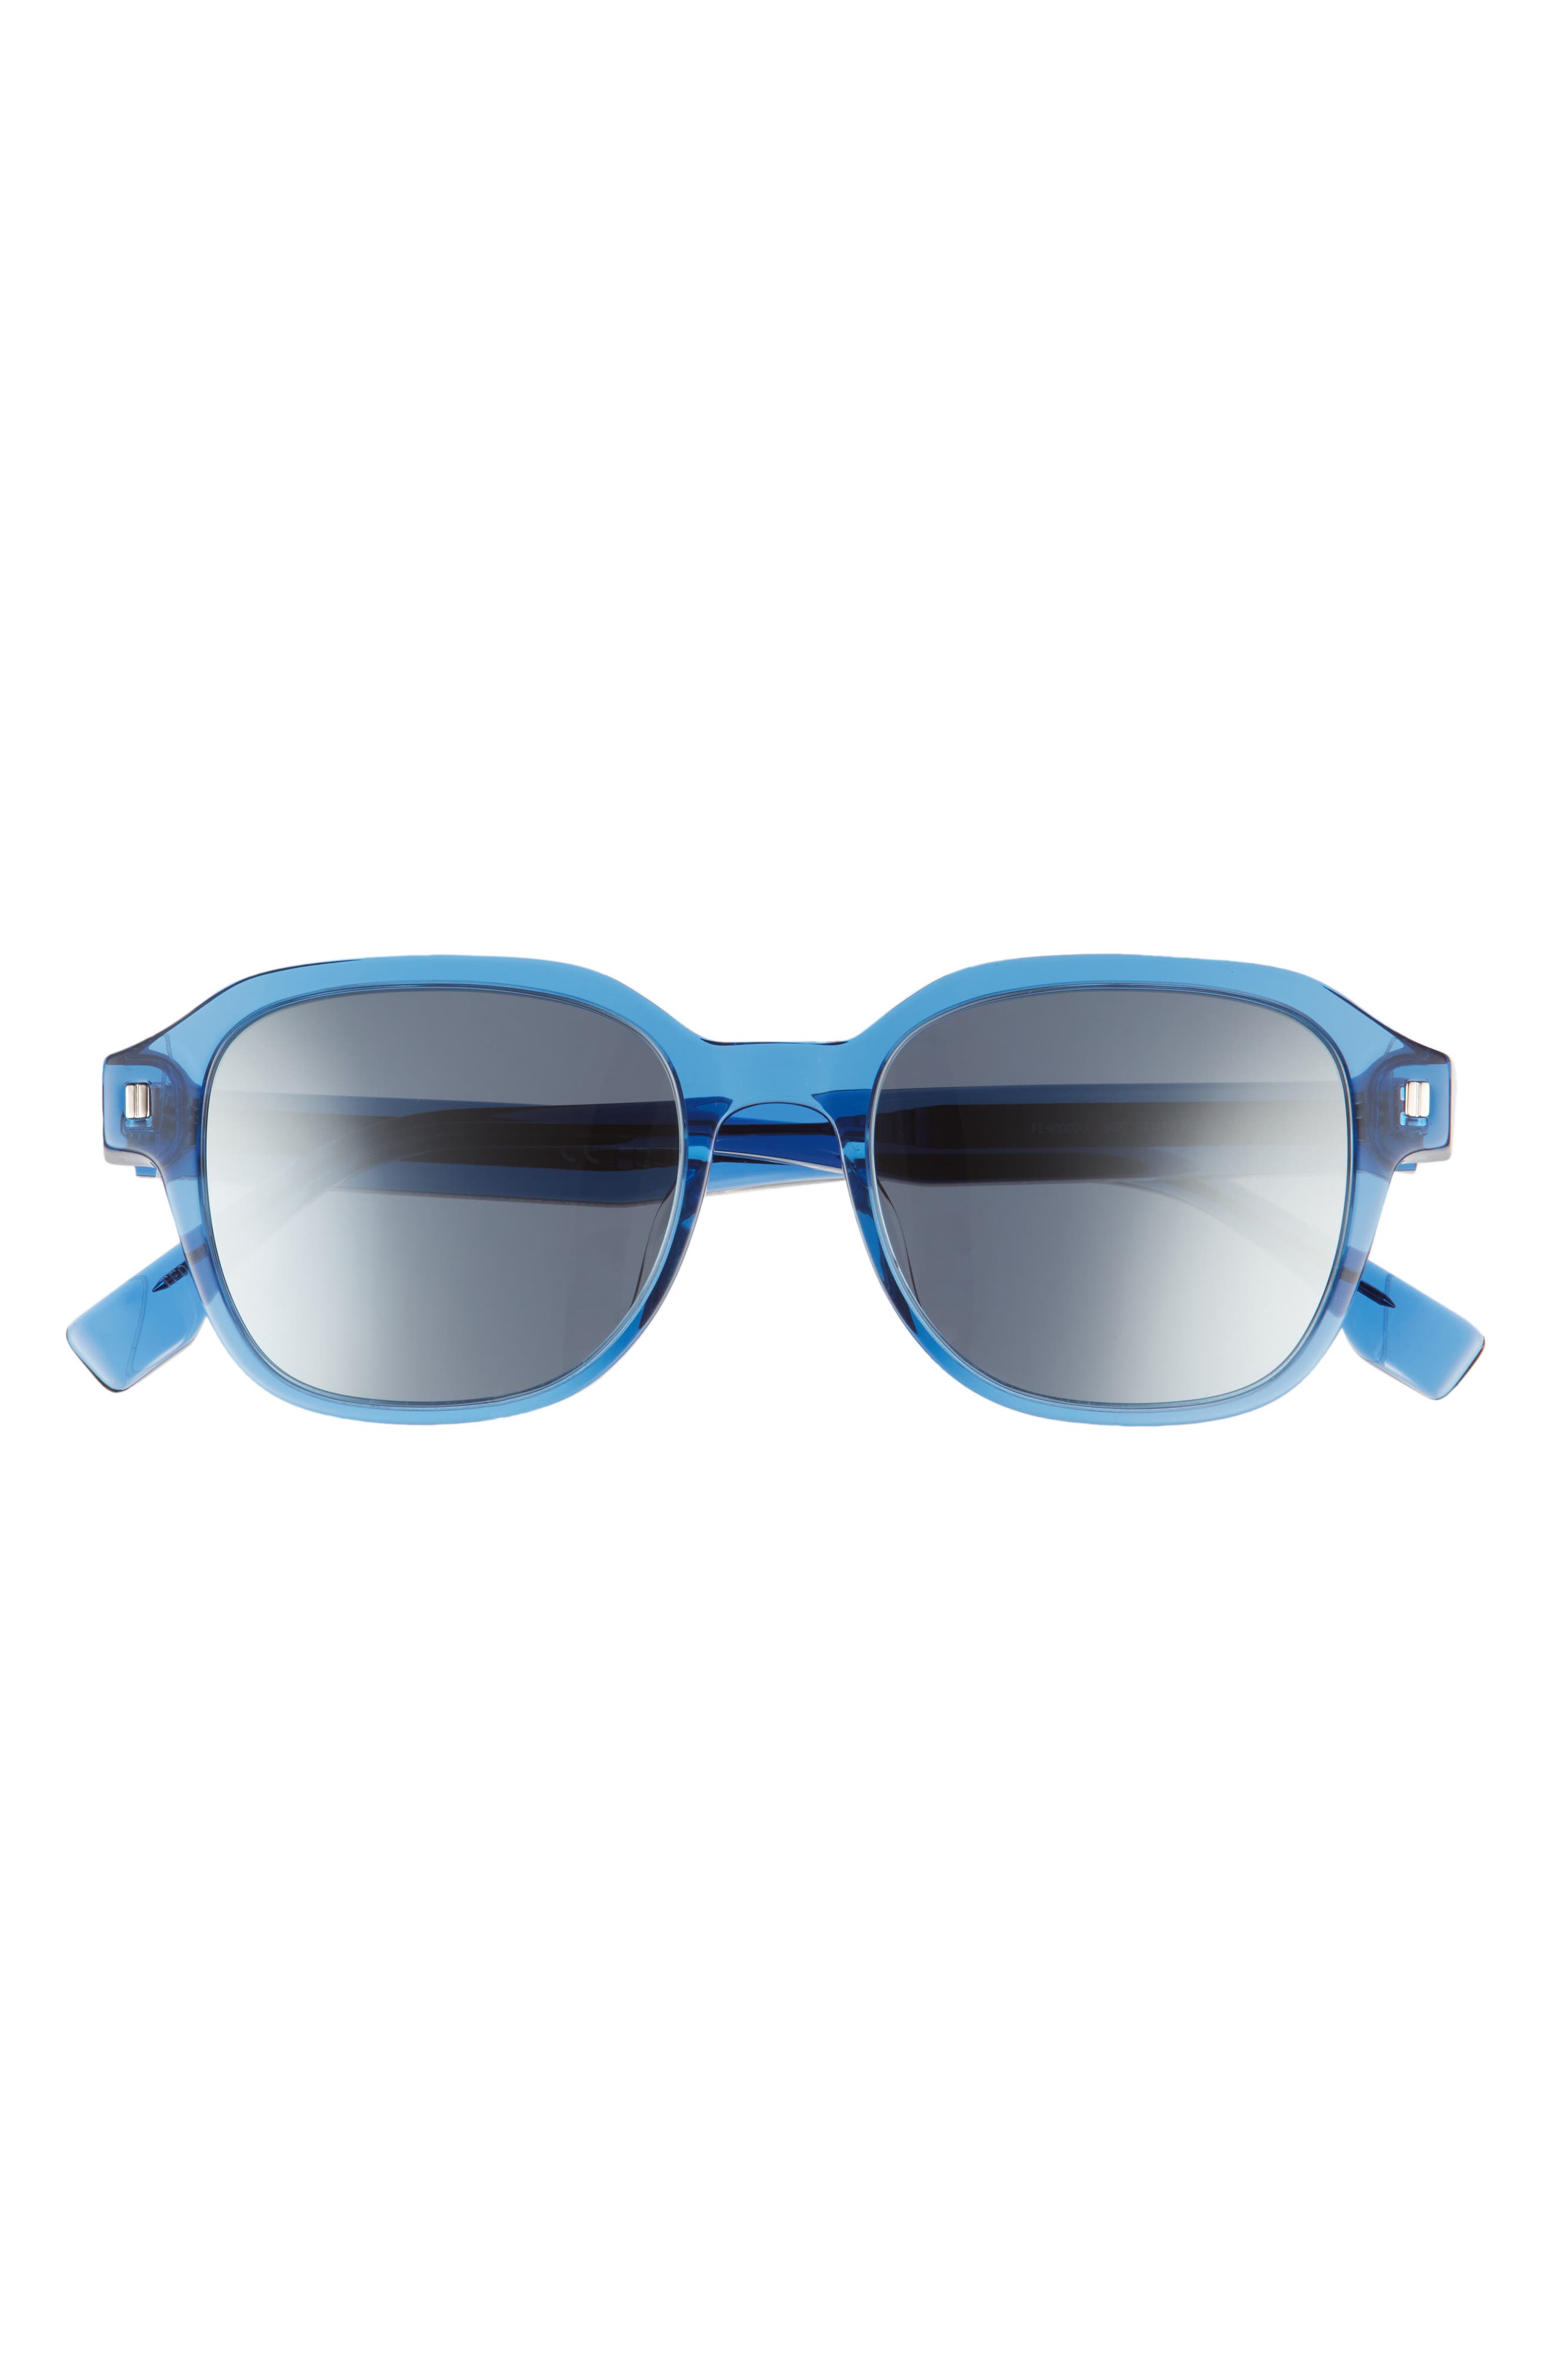 Fendi 52mm Round Sunglasses in Shiny Blue /Blu Mirror at Nordstrom